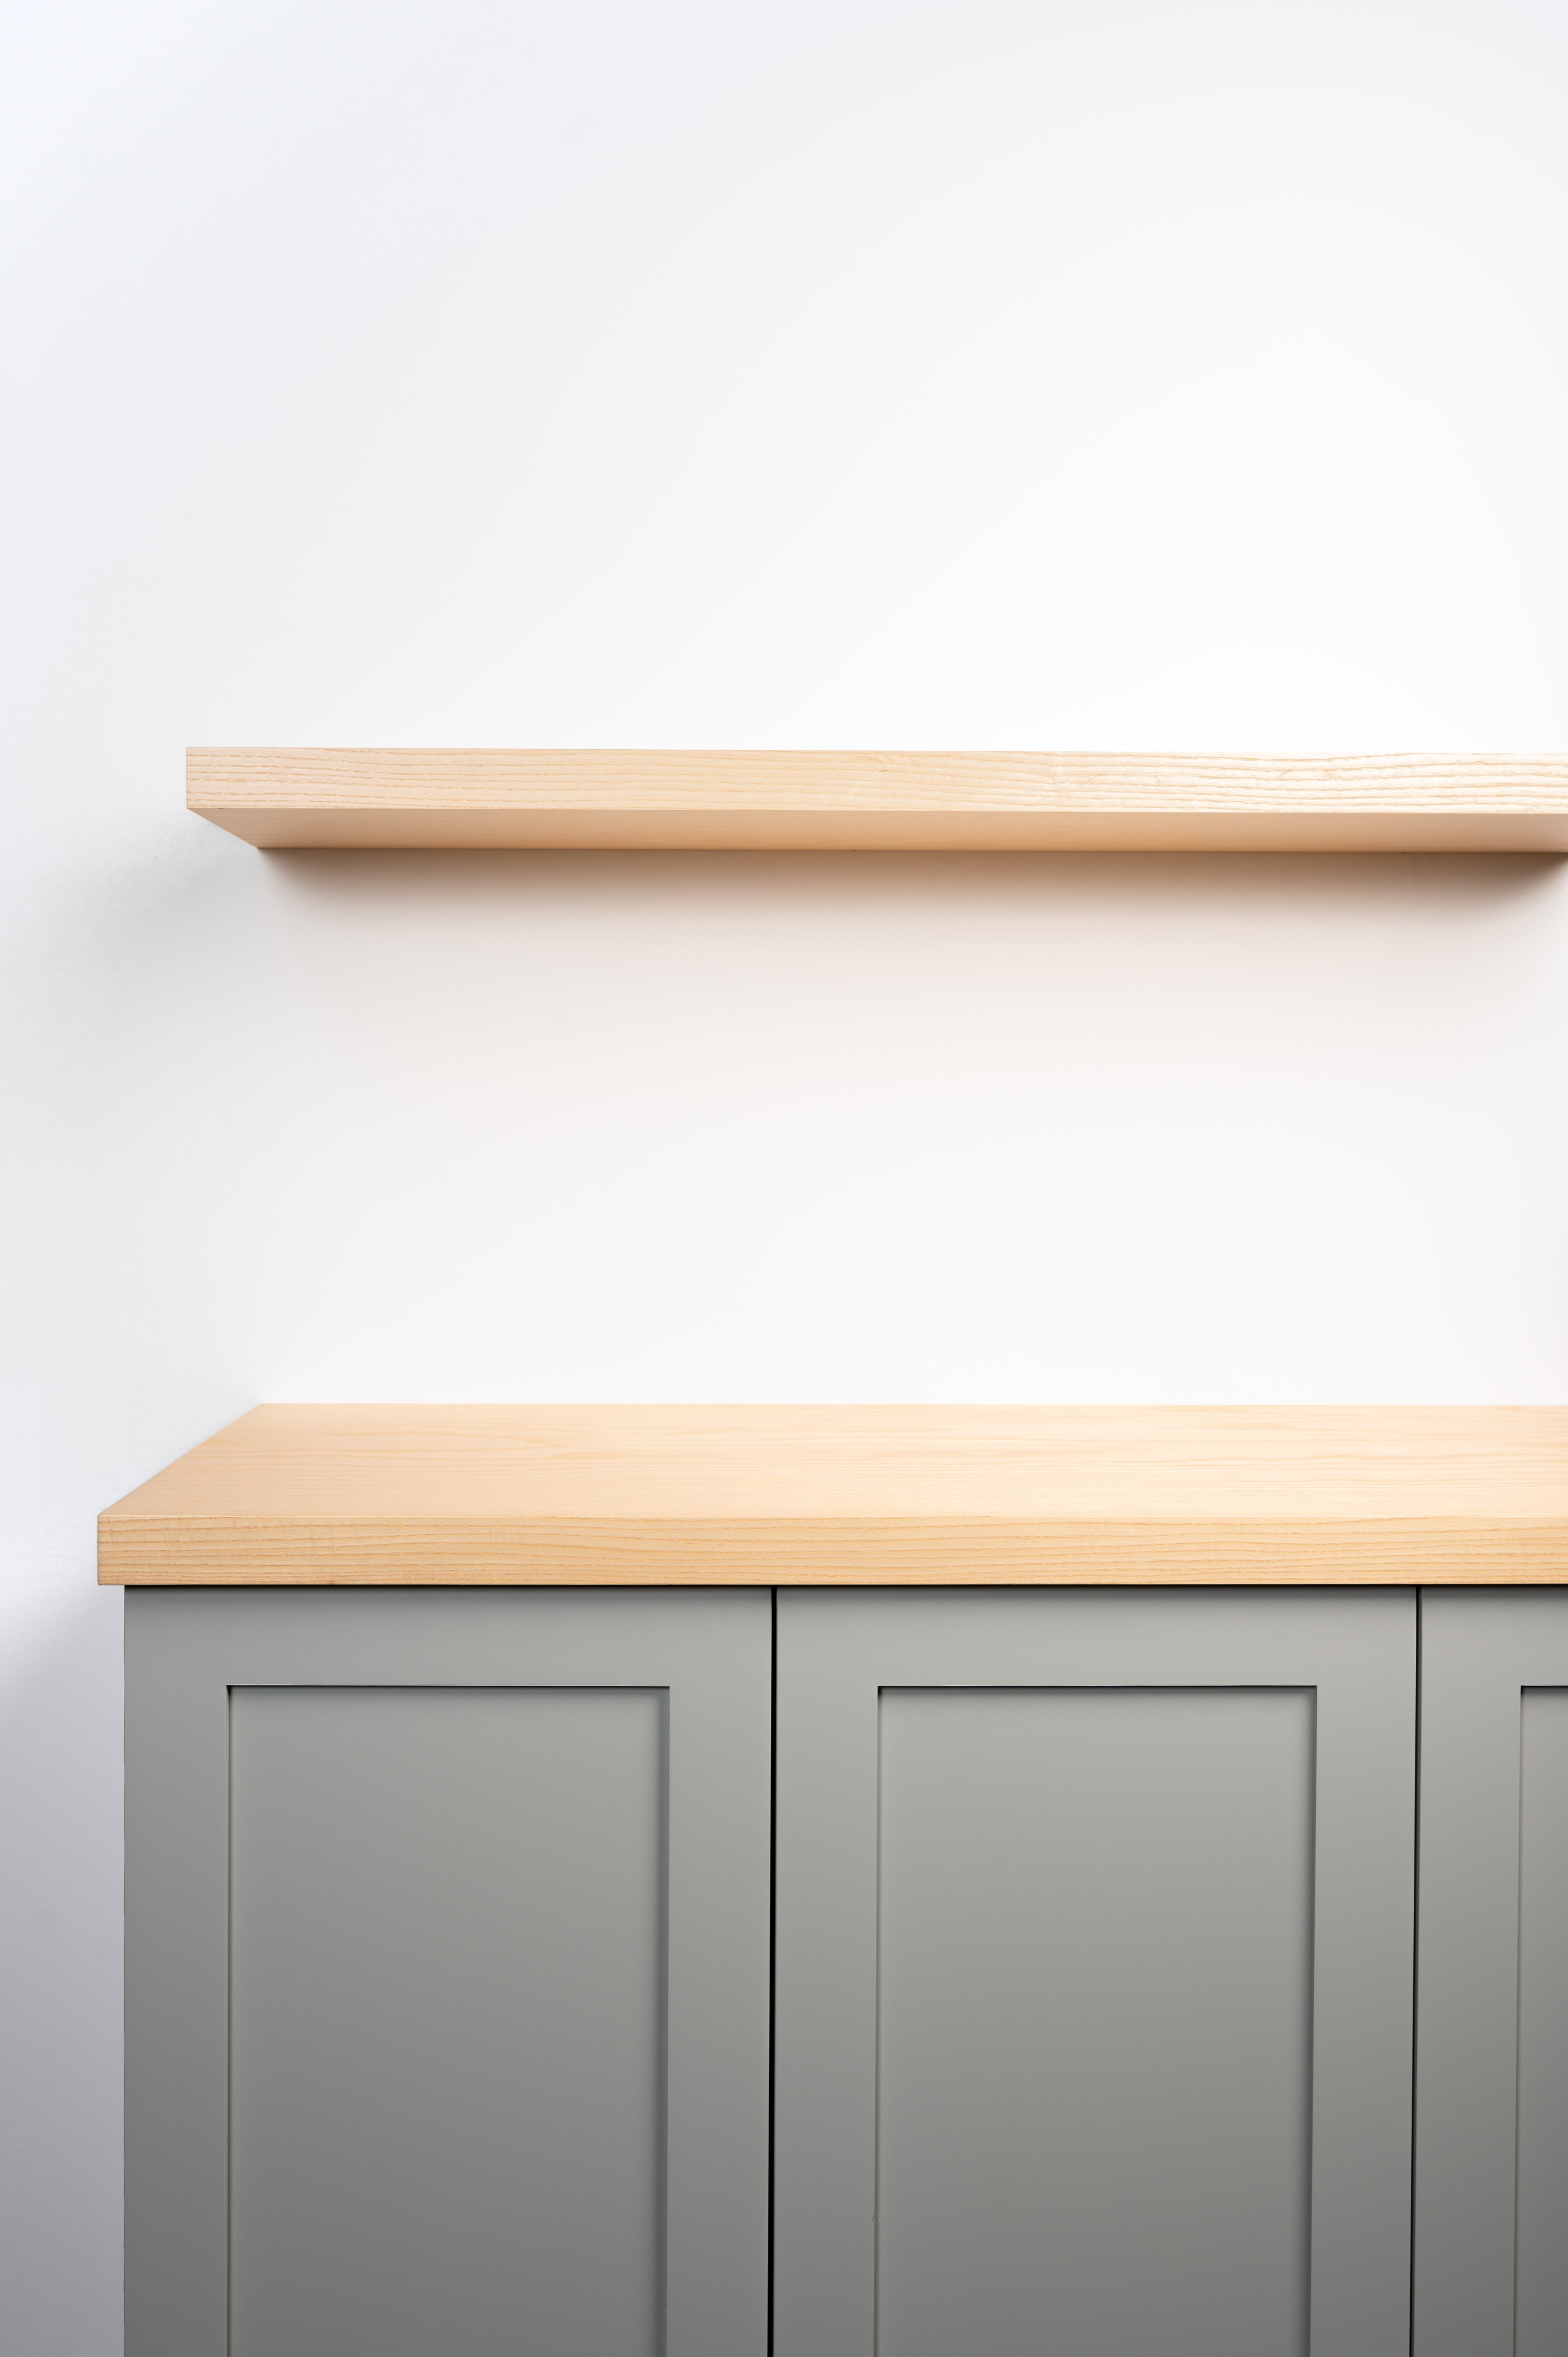 Ash 2-4" thick Cabinet Top / Slab Shelf